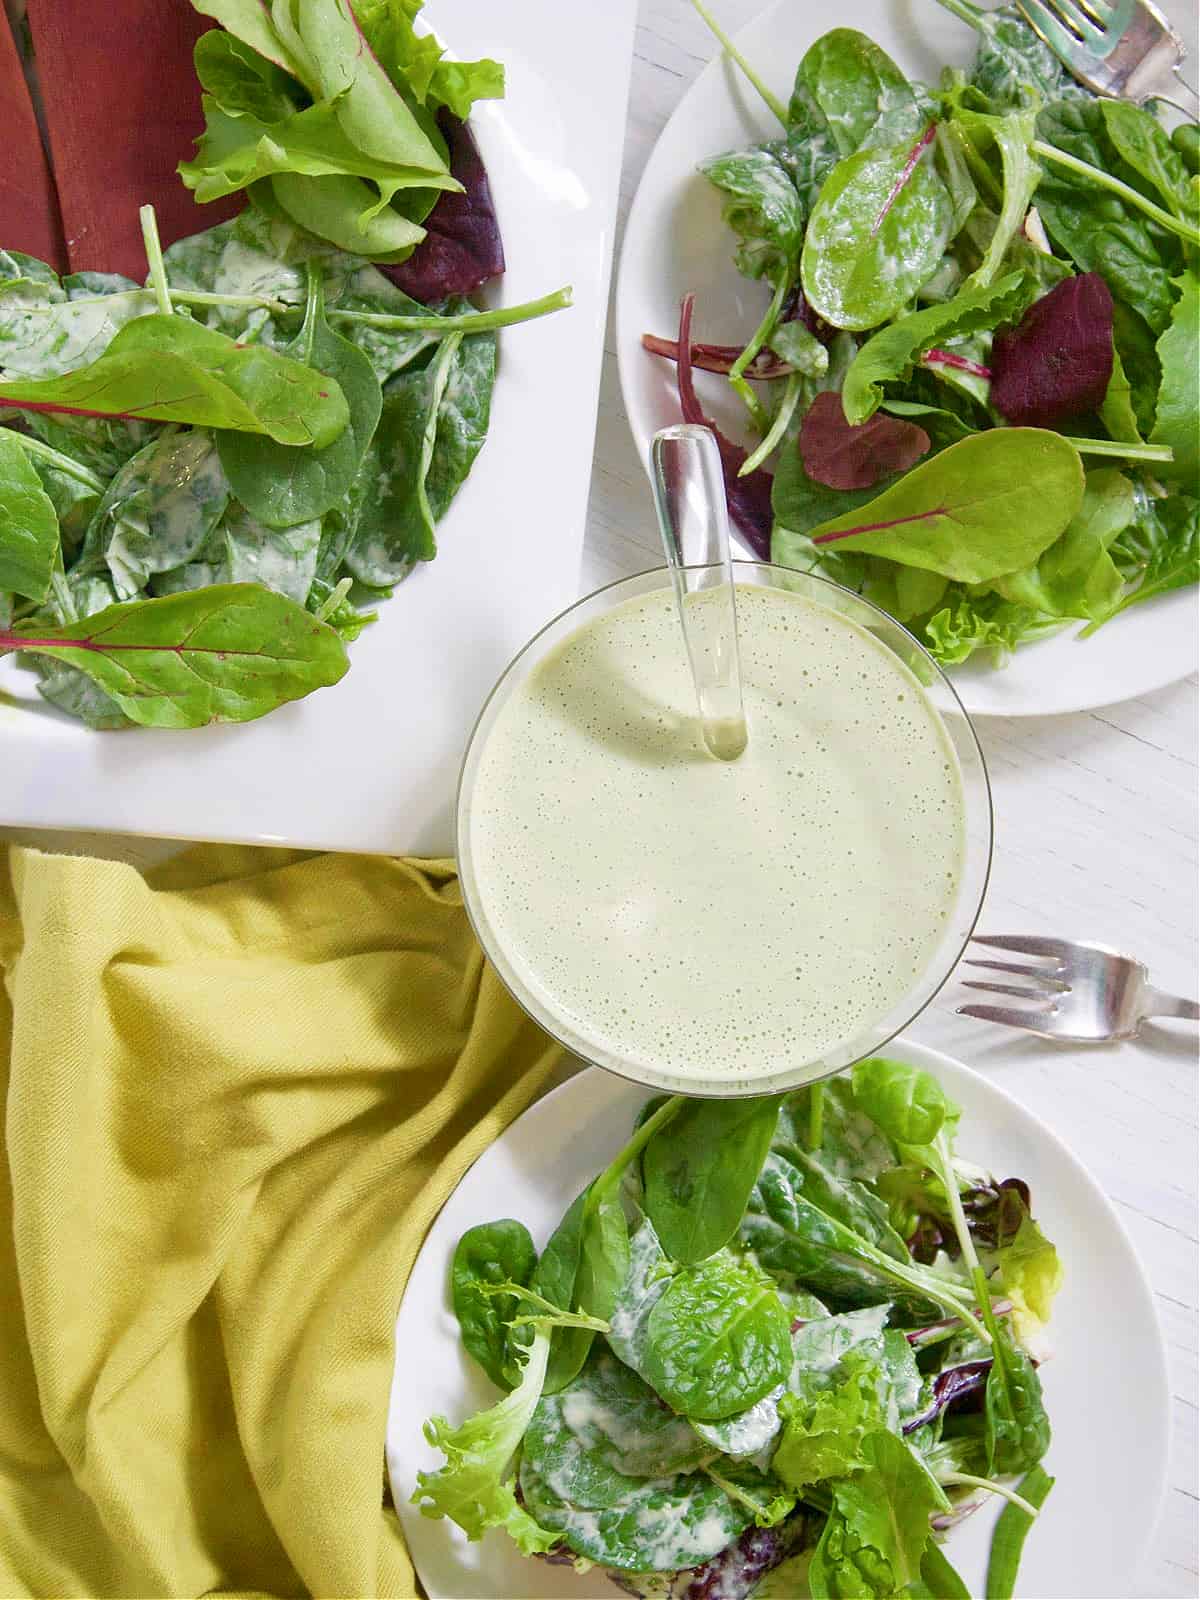 https://www.delicioustable.com/wp-content/uploads/2021/07/Green-Goddess-Dressing-on-salads-in-bowls.jpg